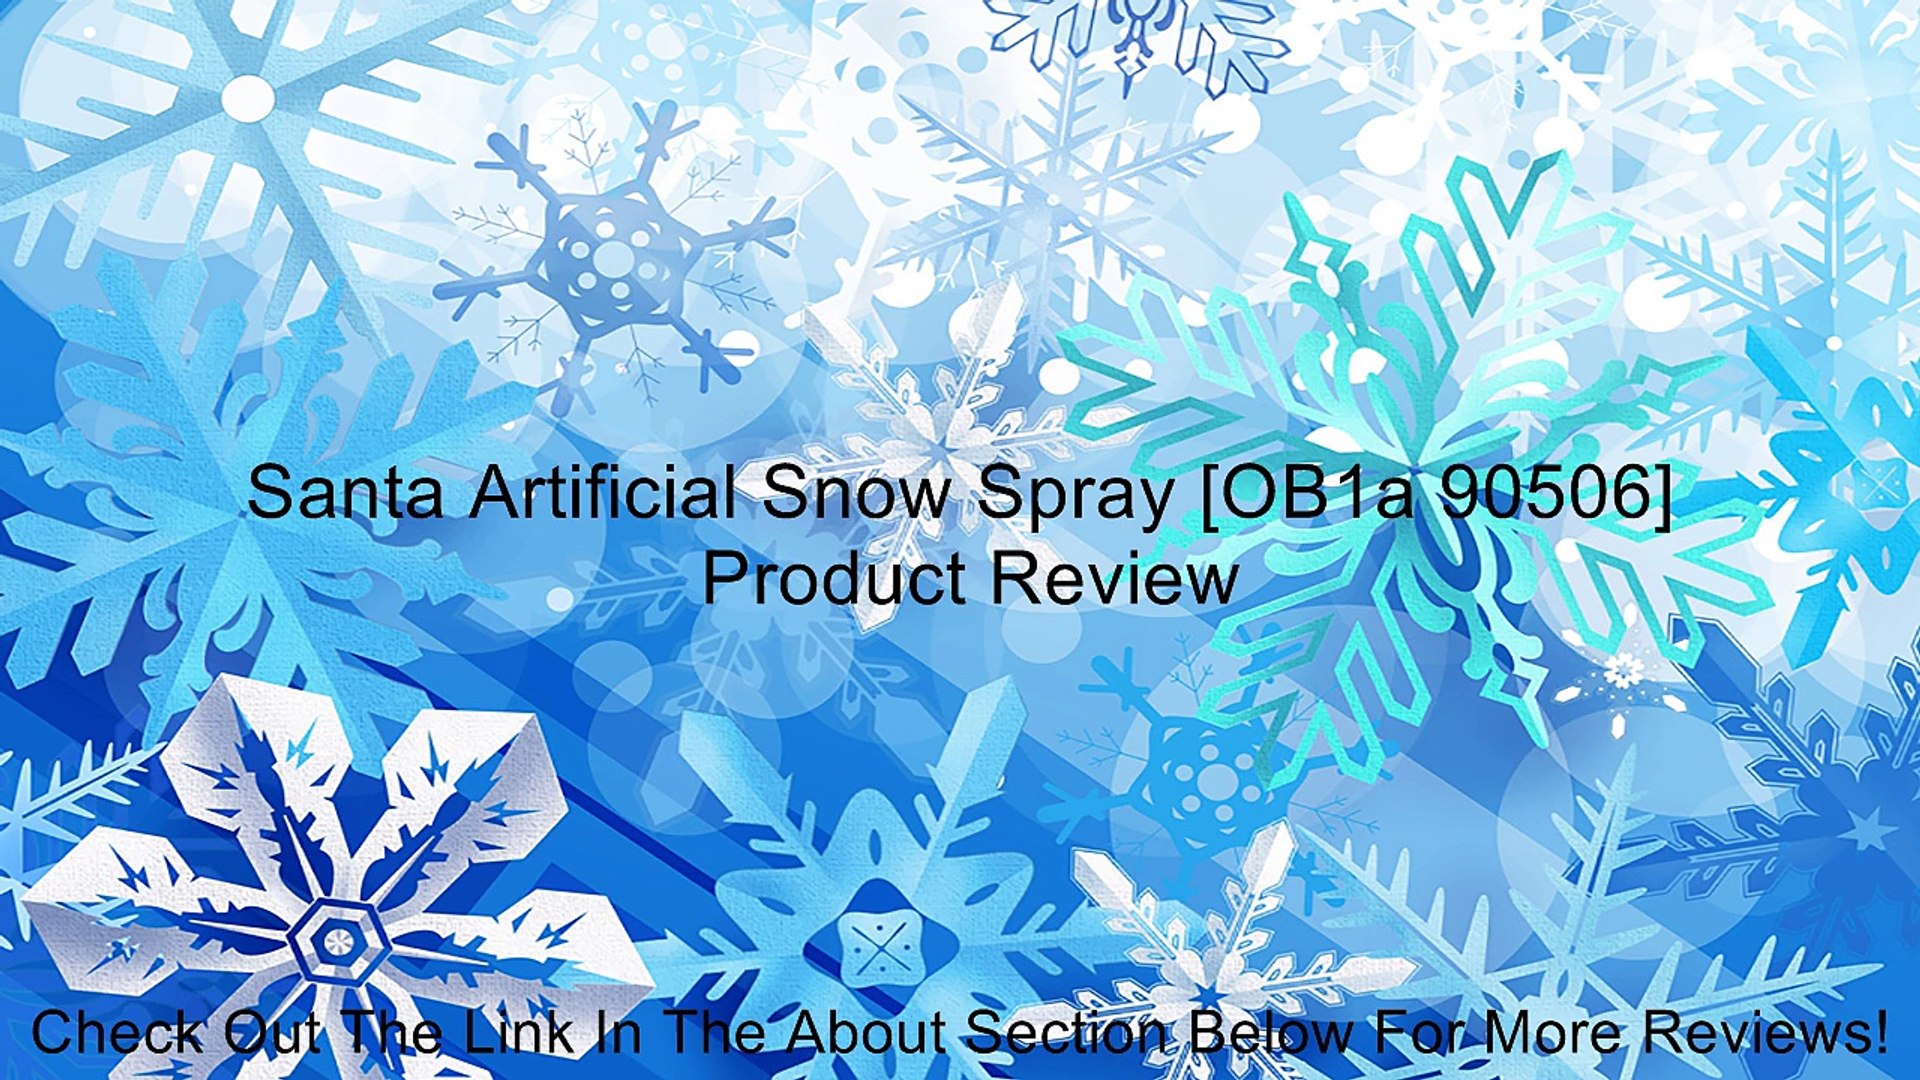 Santa Artificial Snow Spray [90506]